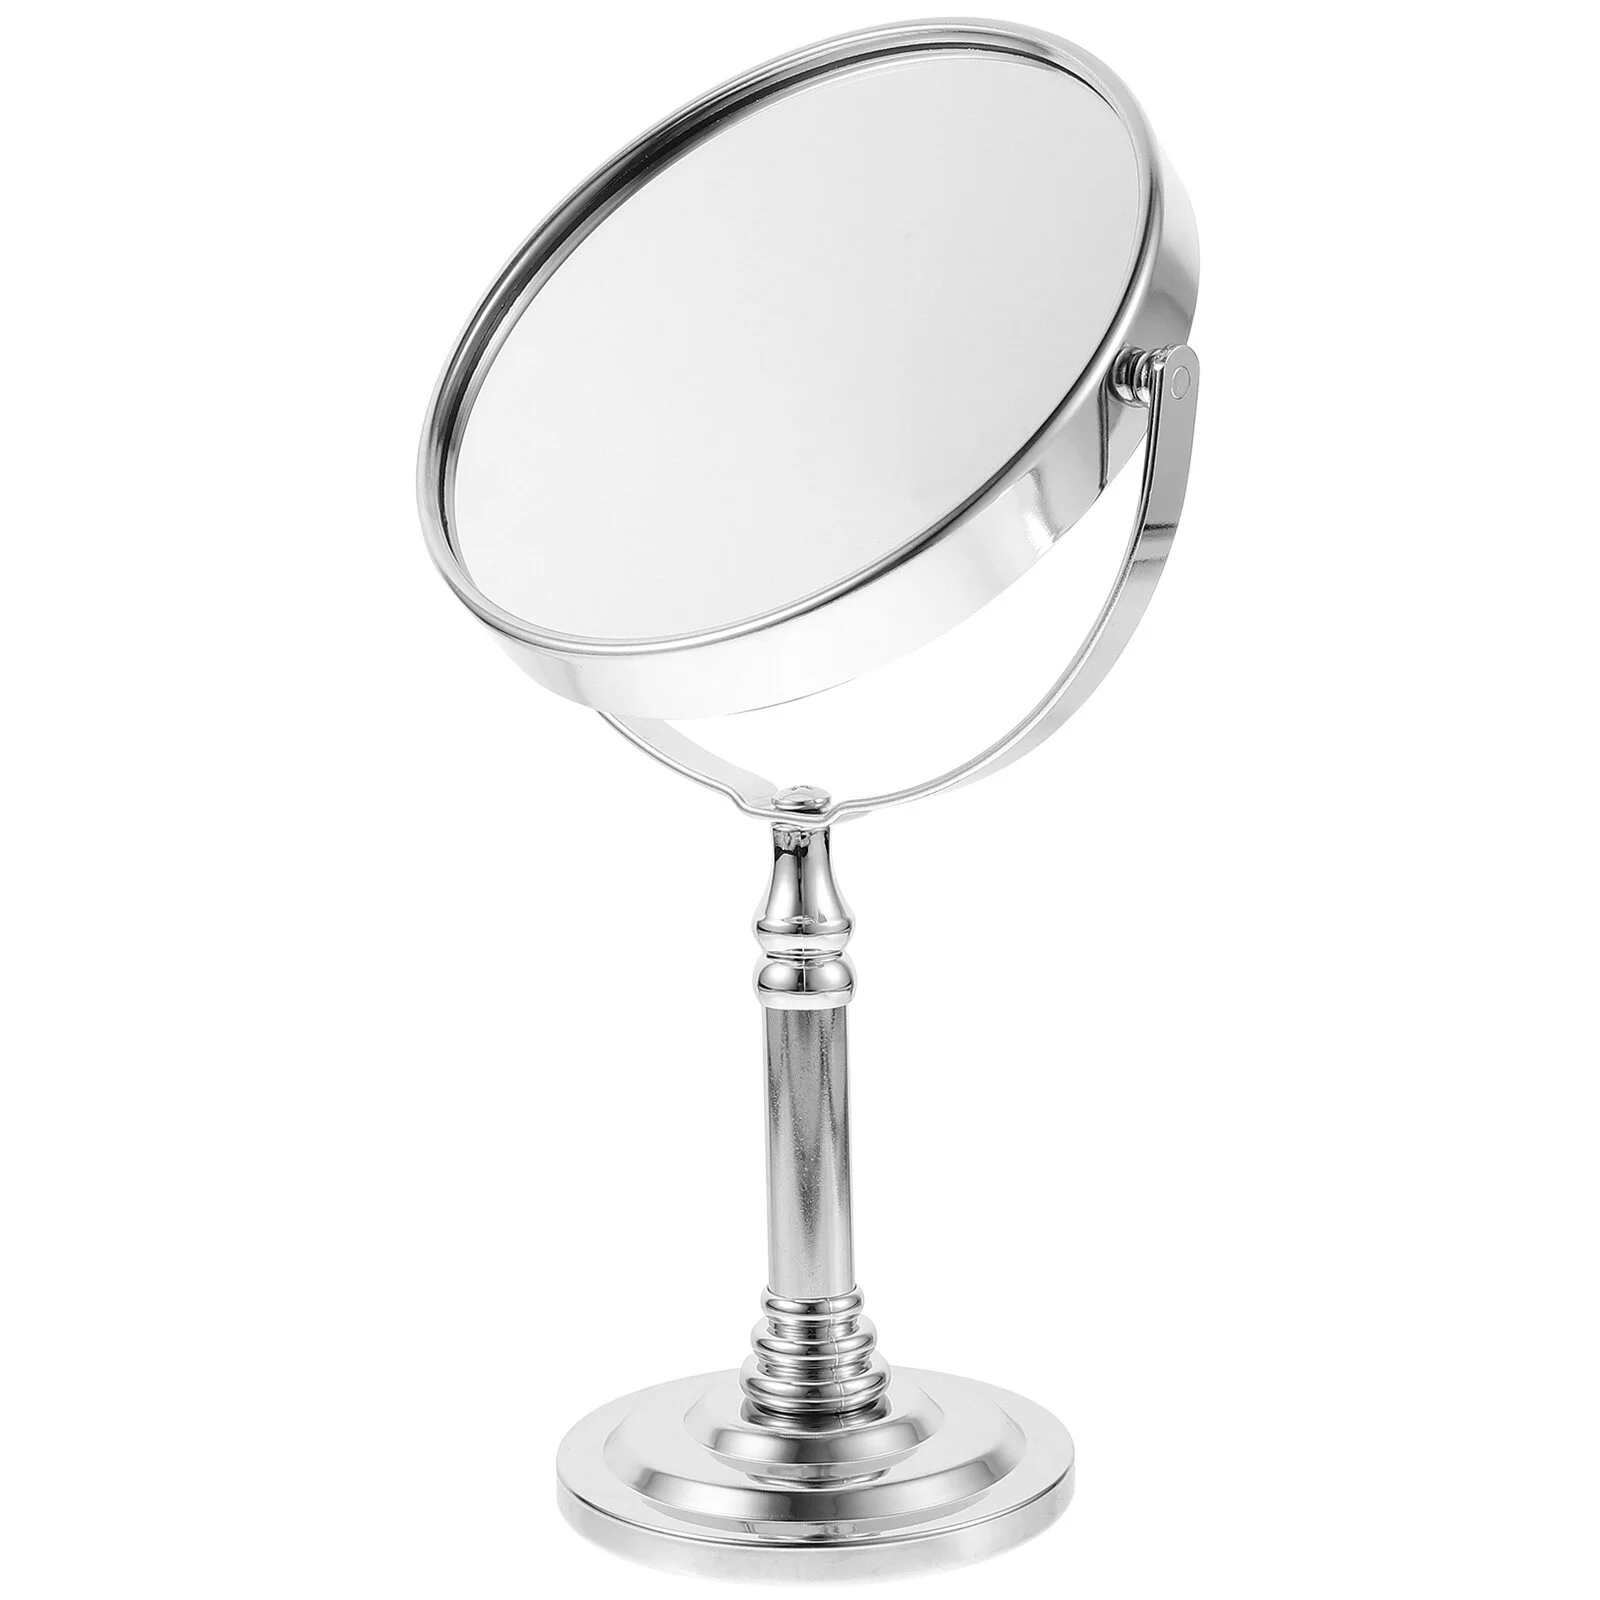 

Vanity Mirrors Vanity Makeup Desk Personal Personal Table Mirror For Men Men Gift 360 Haircuts Circle Tabletop